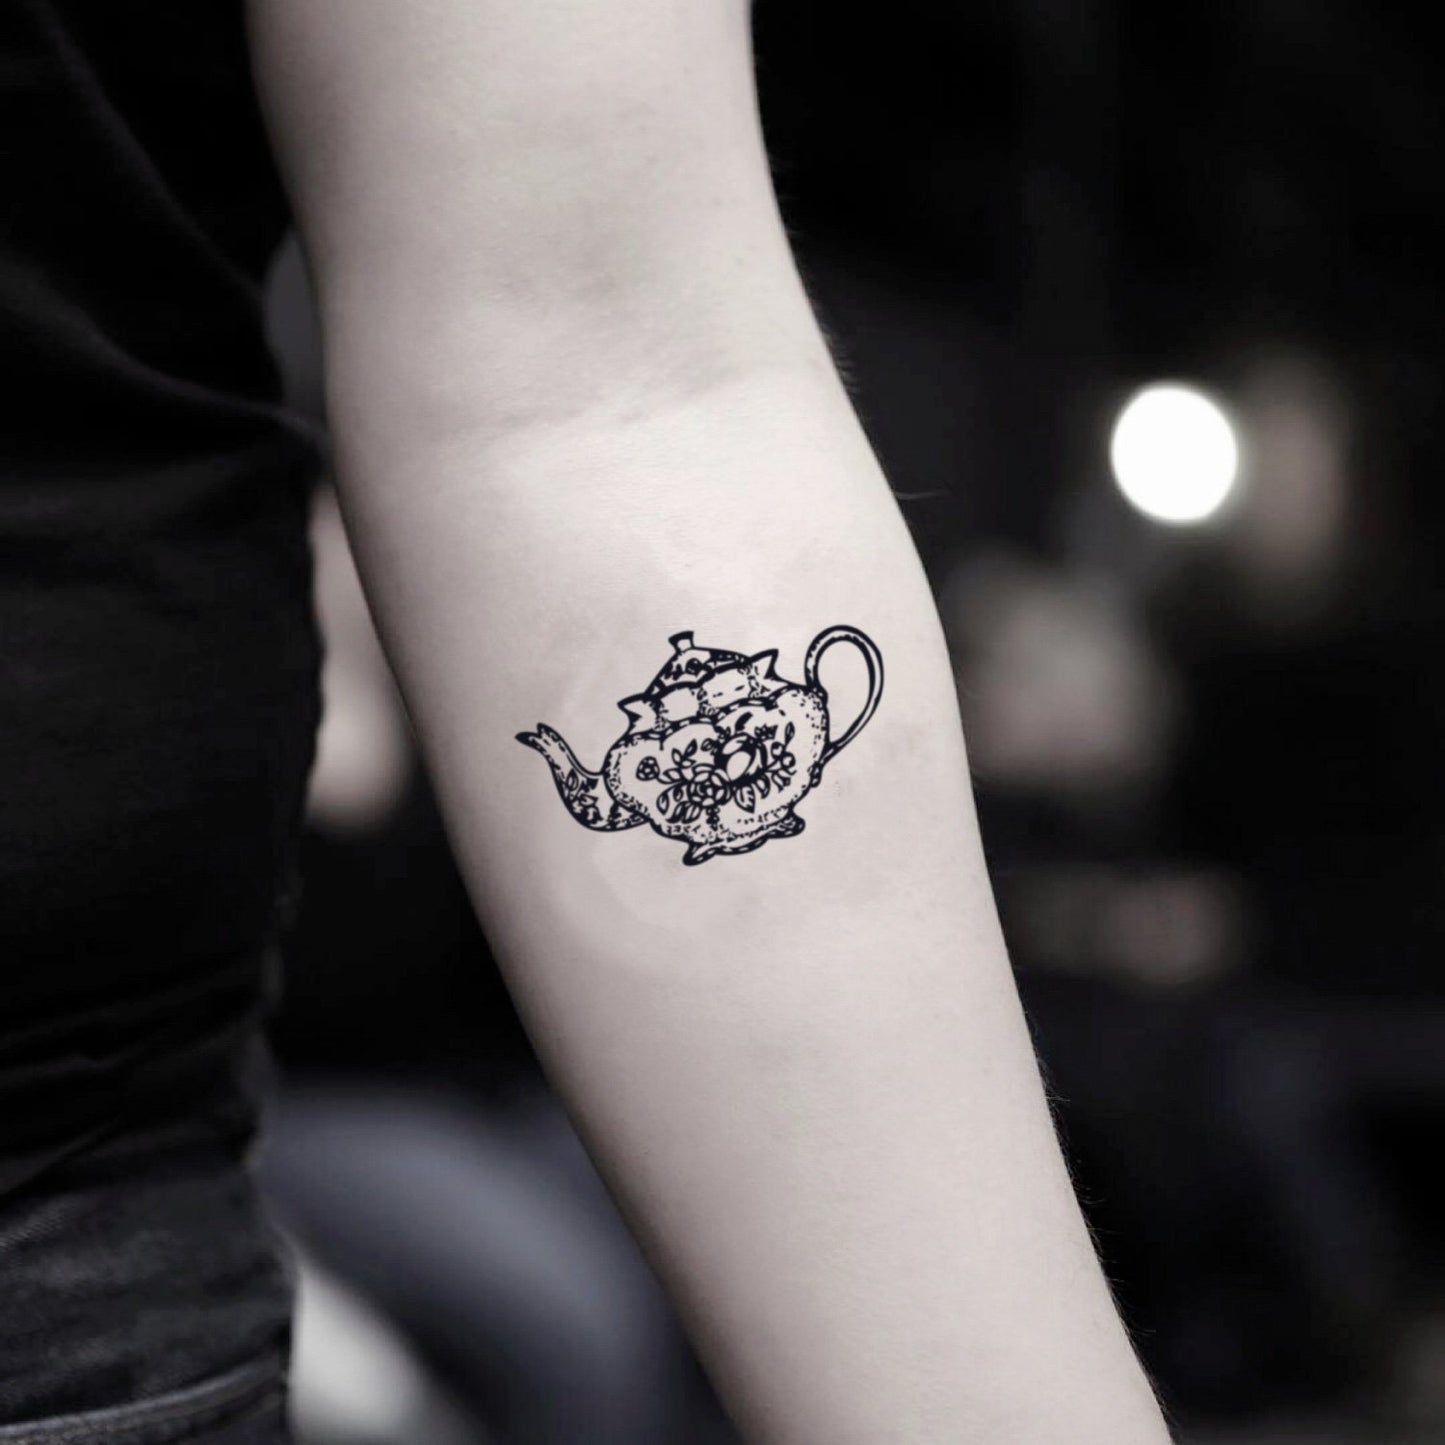 fake small teapot vintage temporary tattoo sticker design idea on inner arm